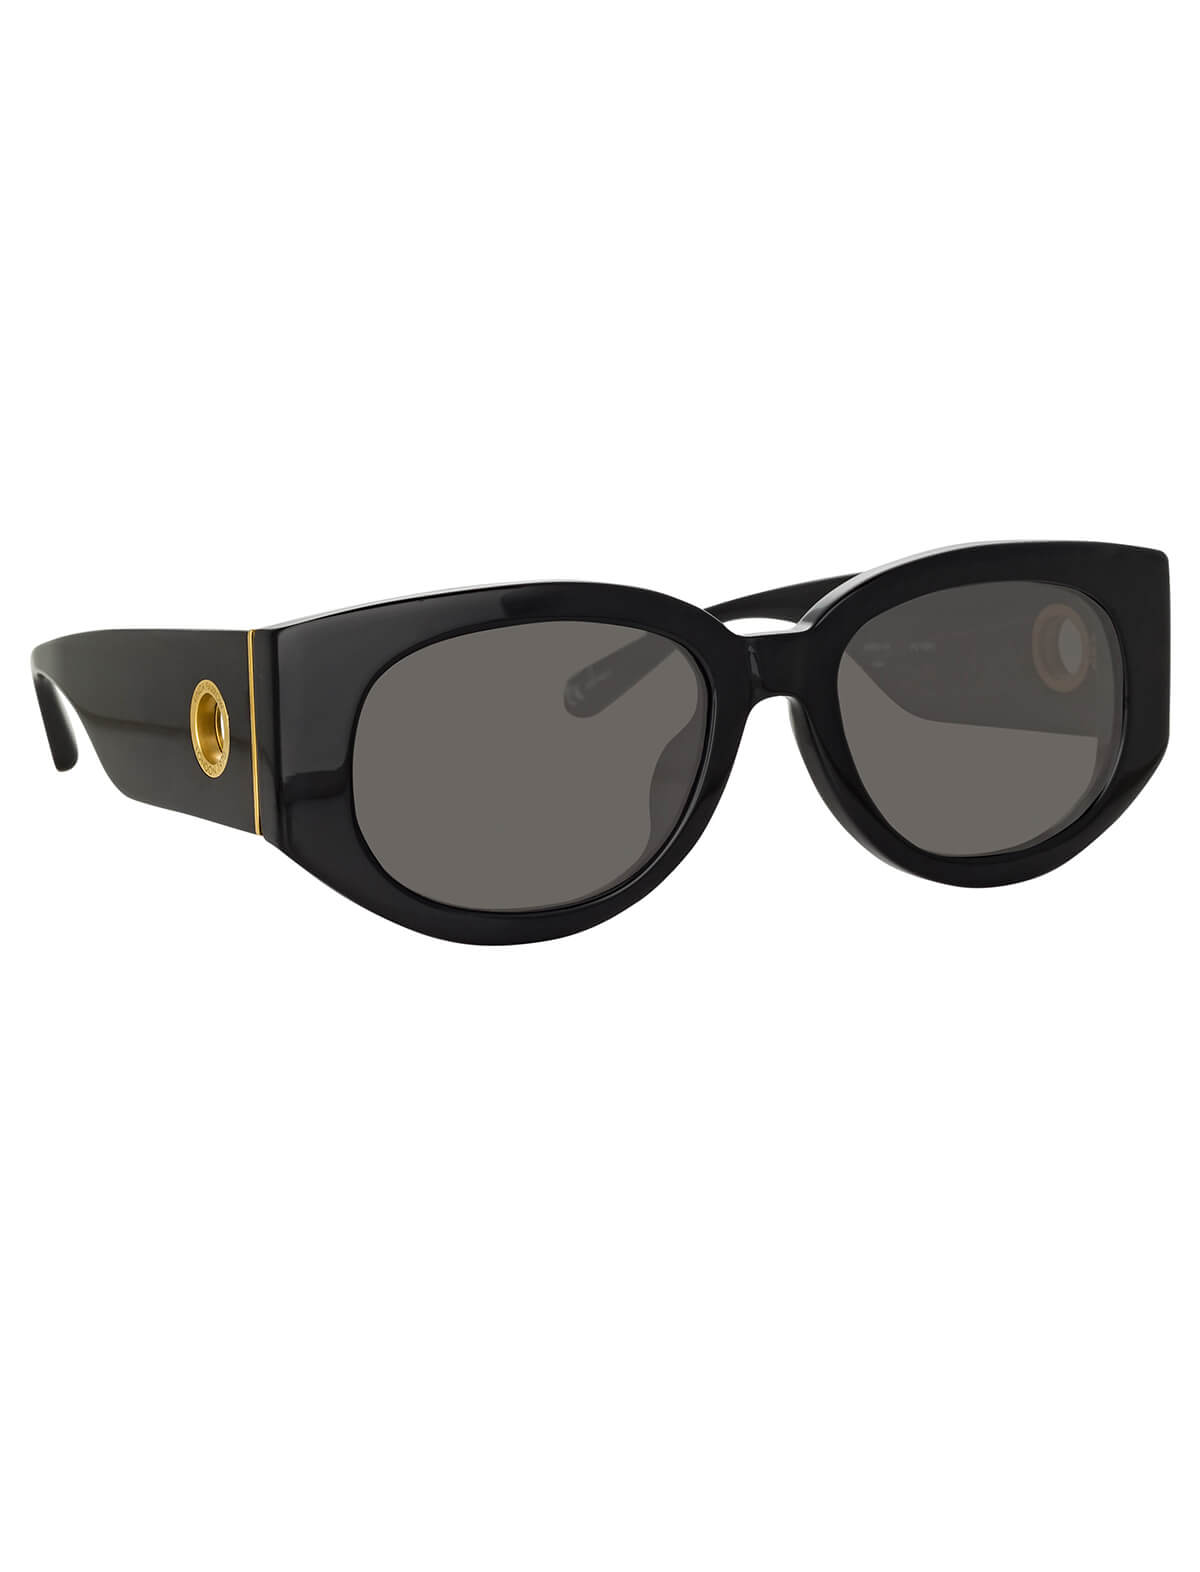 LINDA FARROW Debbie D-Frame Sunglasses in Black